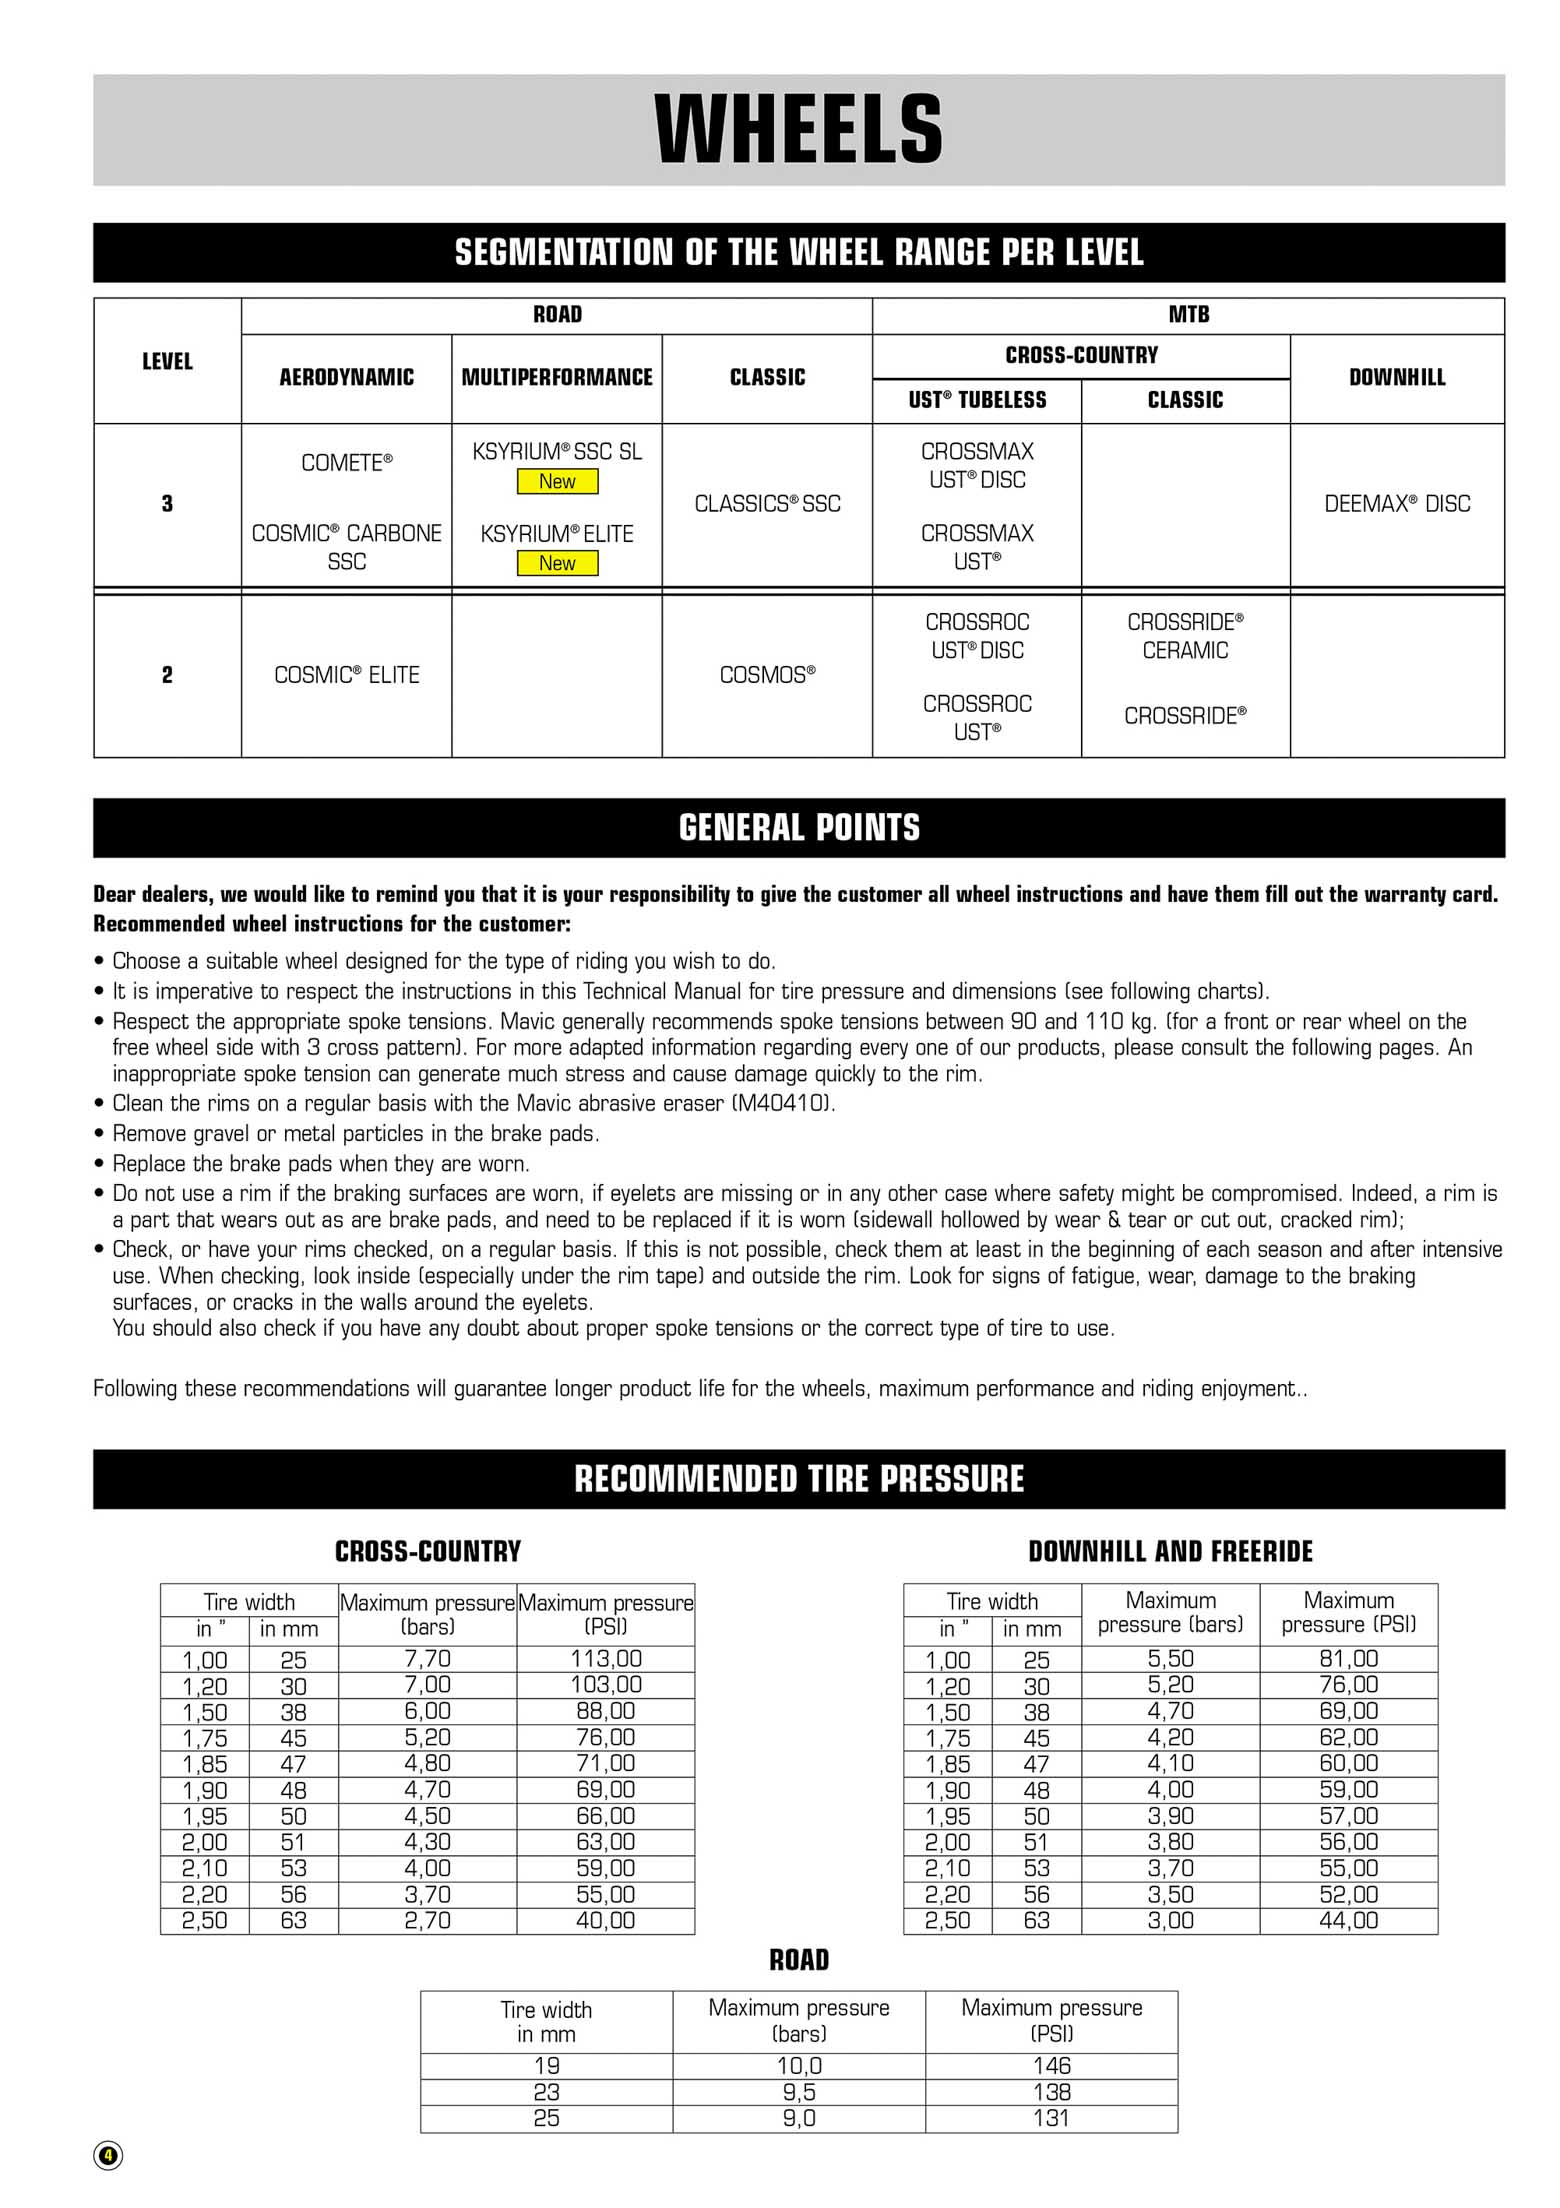 MAVIC - technical manual 02 page 004 main image